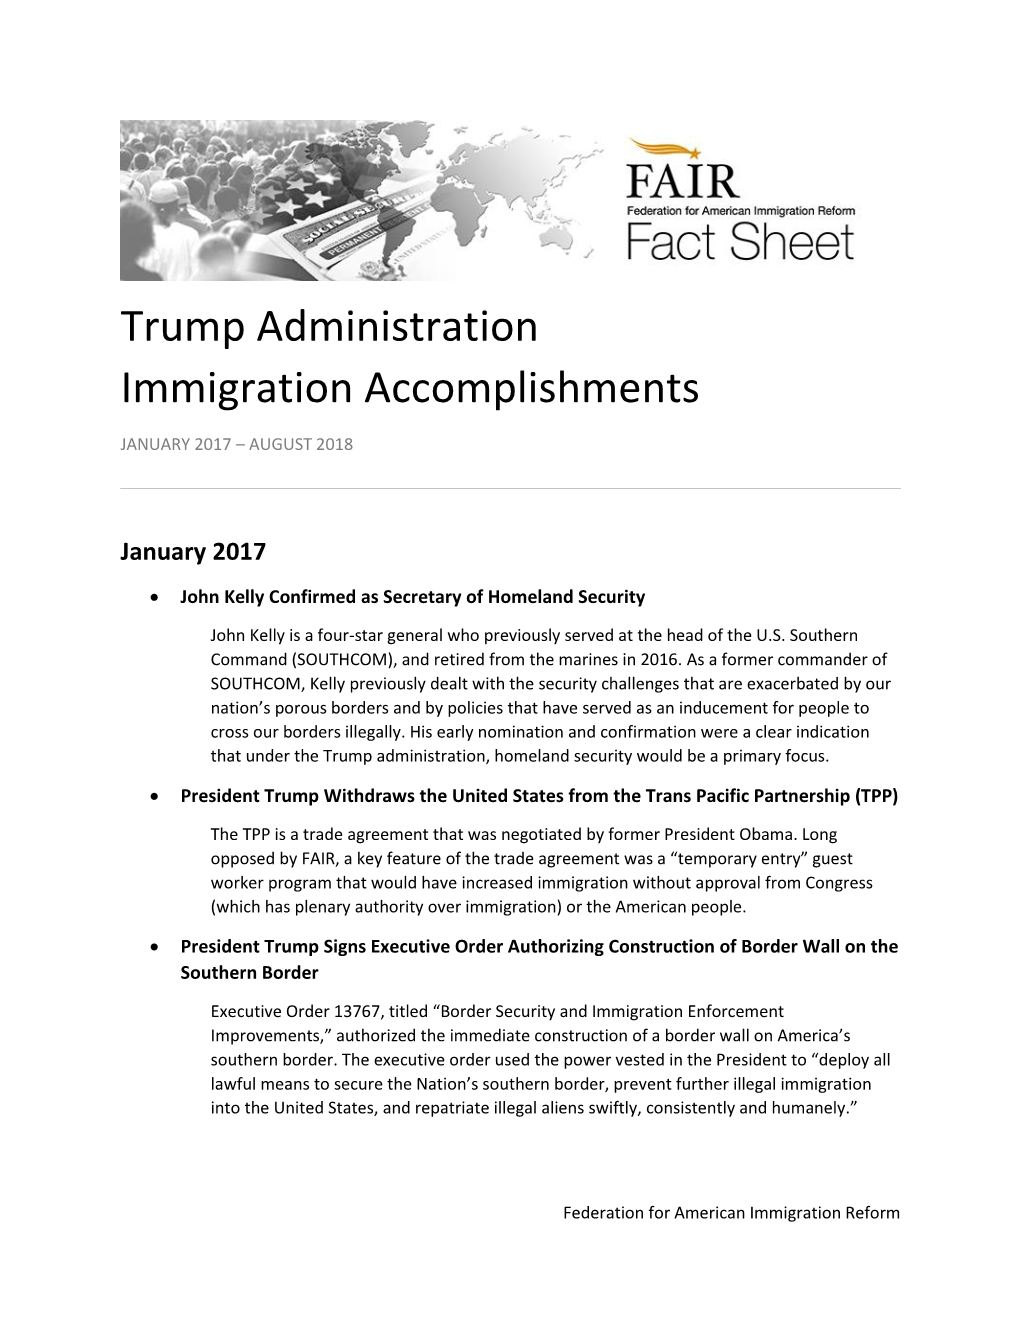 Trump Administration Immigration Accomplishments